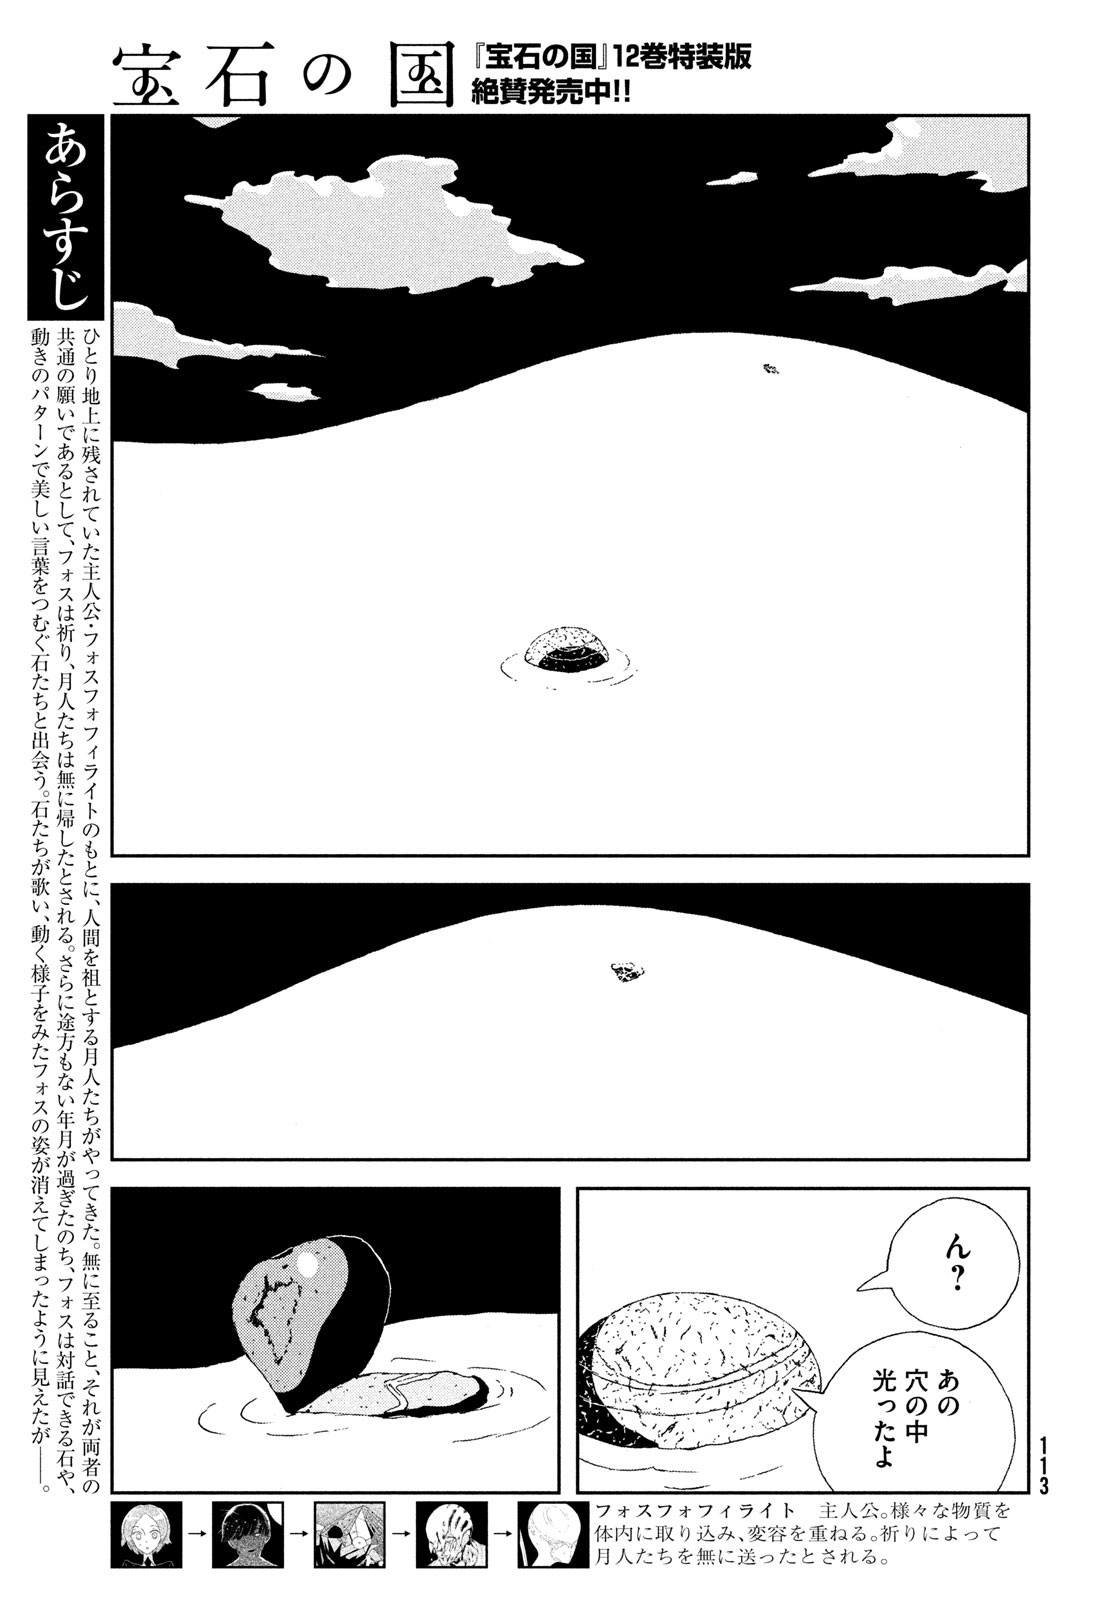 Houseki no Kuni - Chapter 101 - Page 3